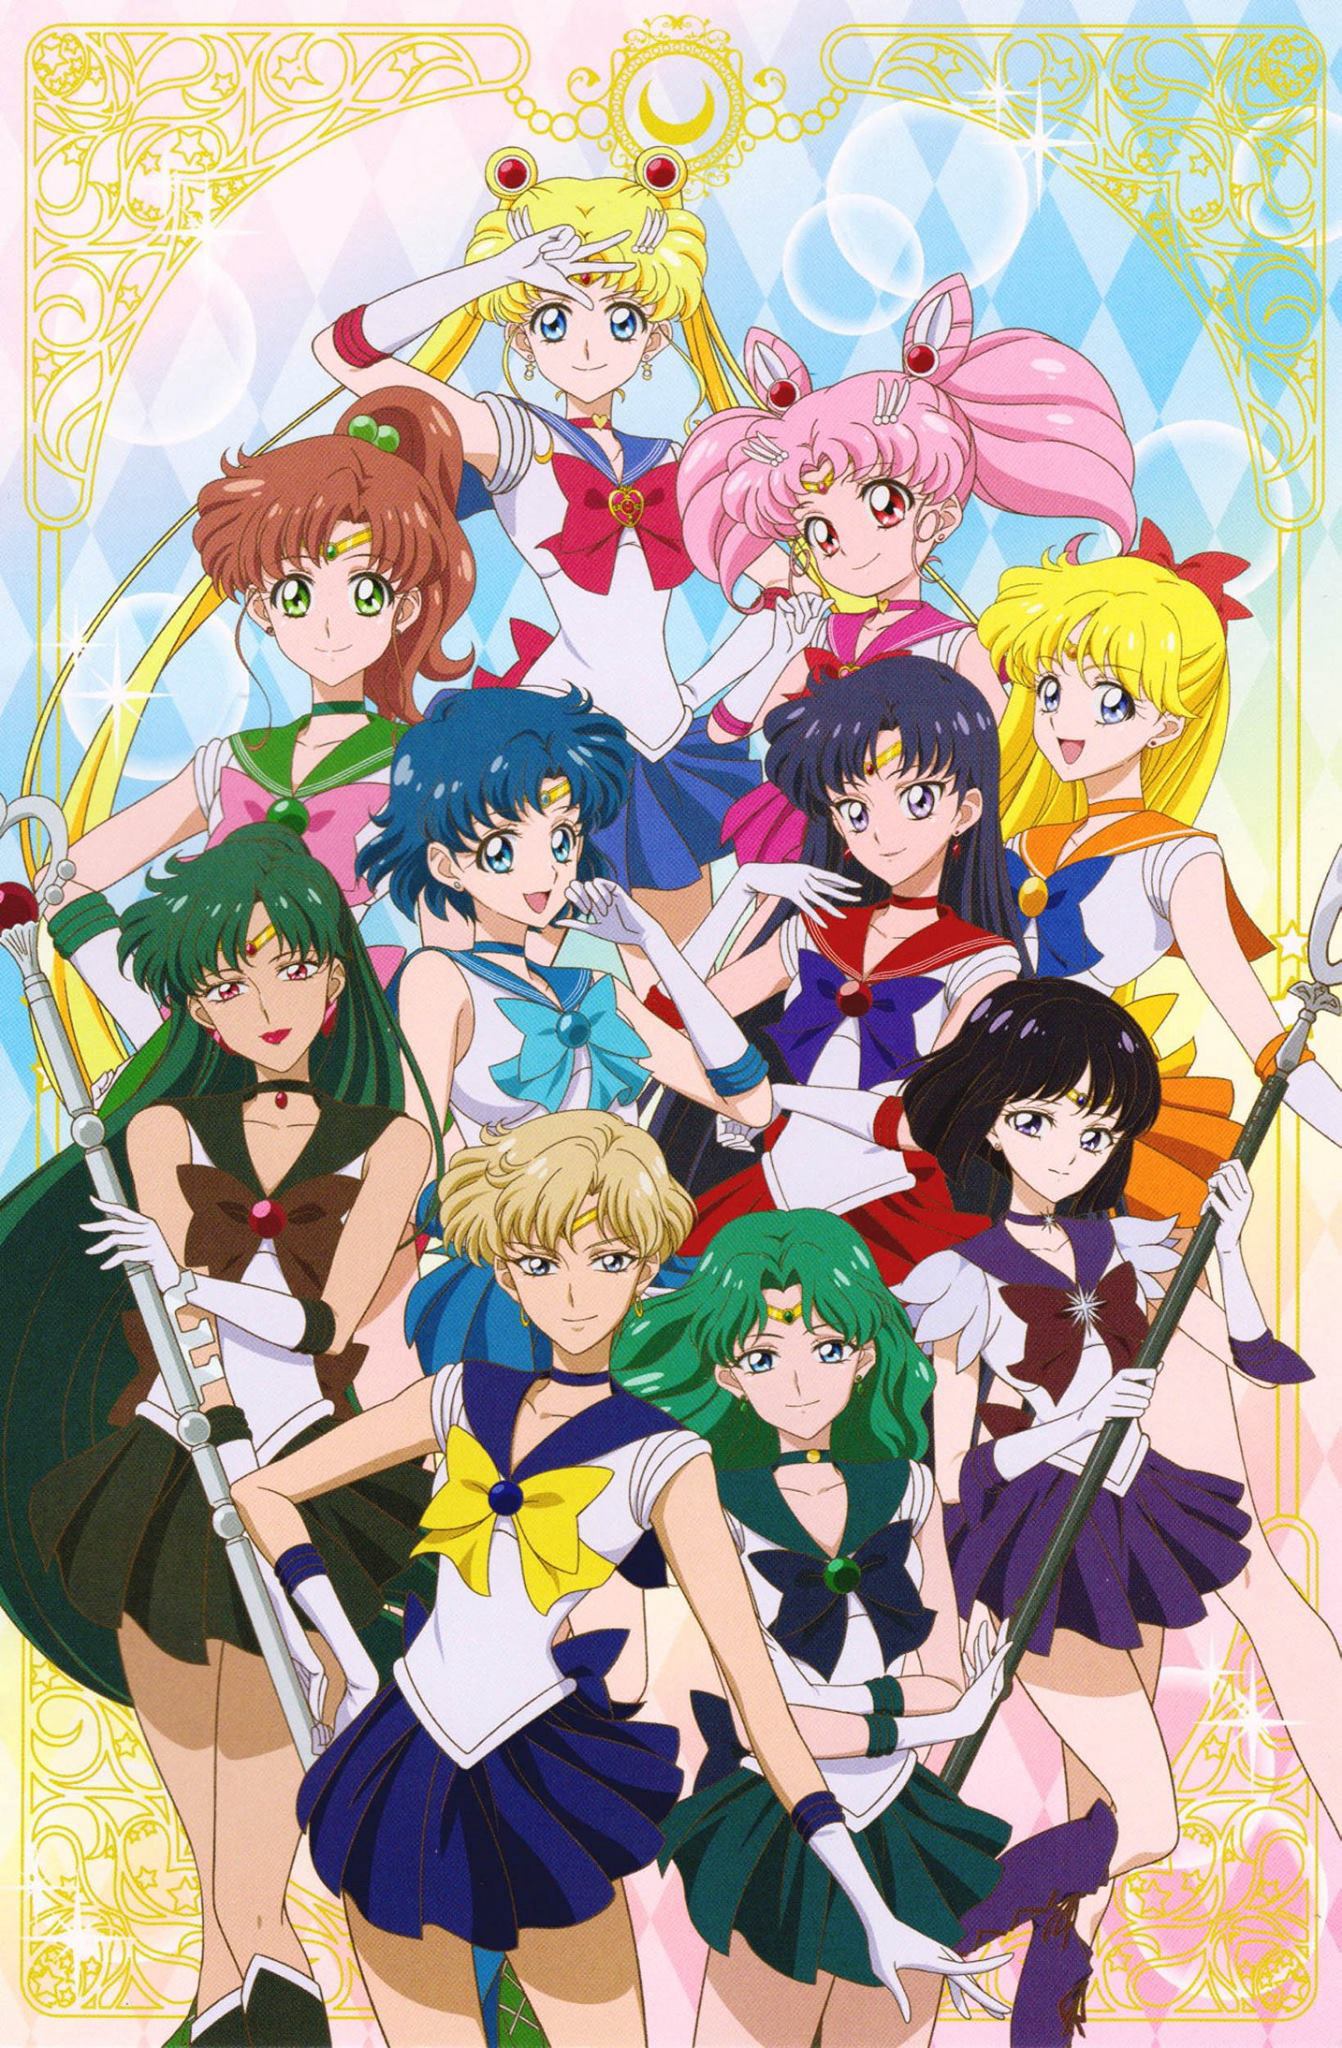 Thủy thủ mặt trăng (Phần 3) - Sailor Moon Crystal (Season 3)